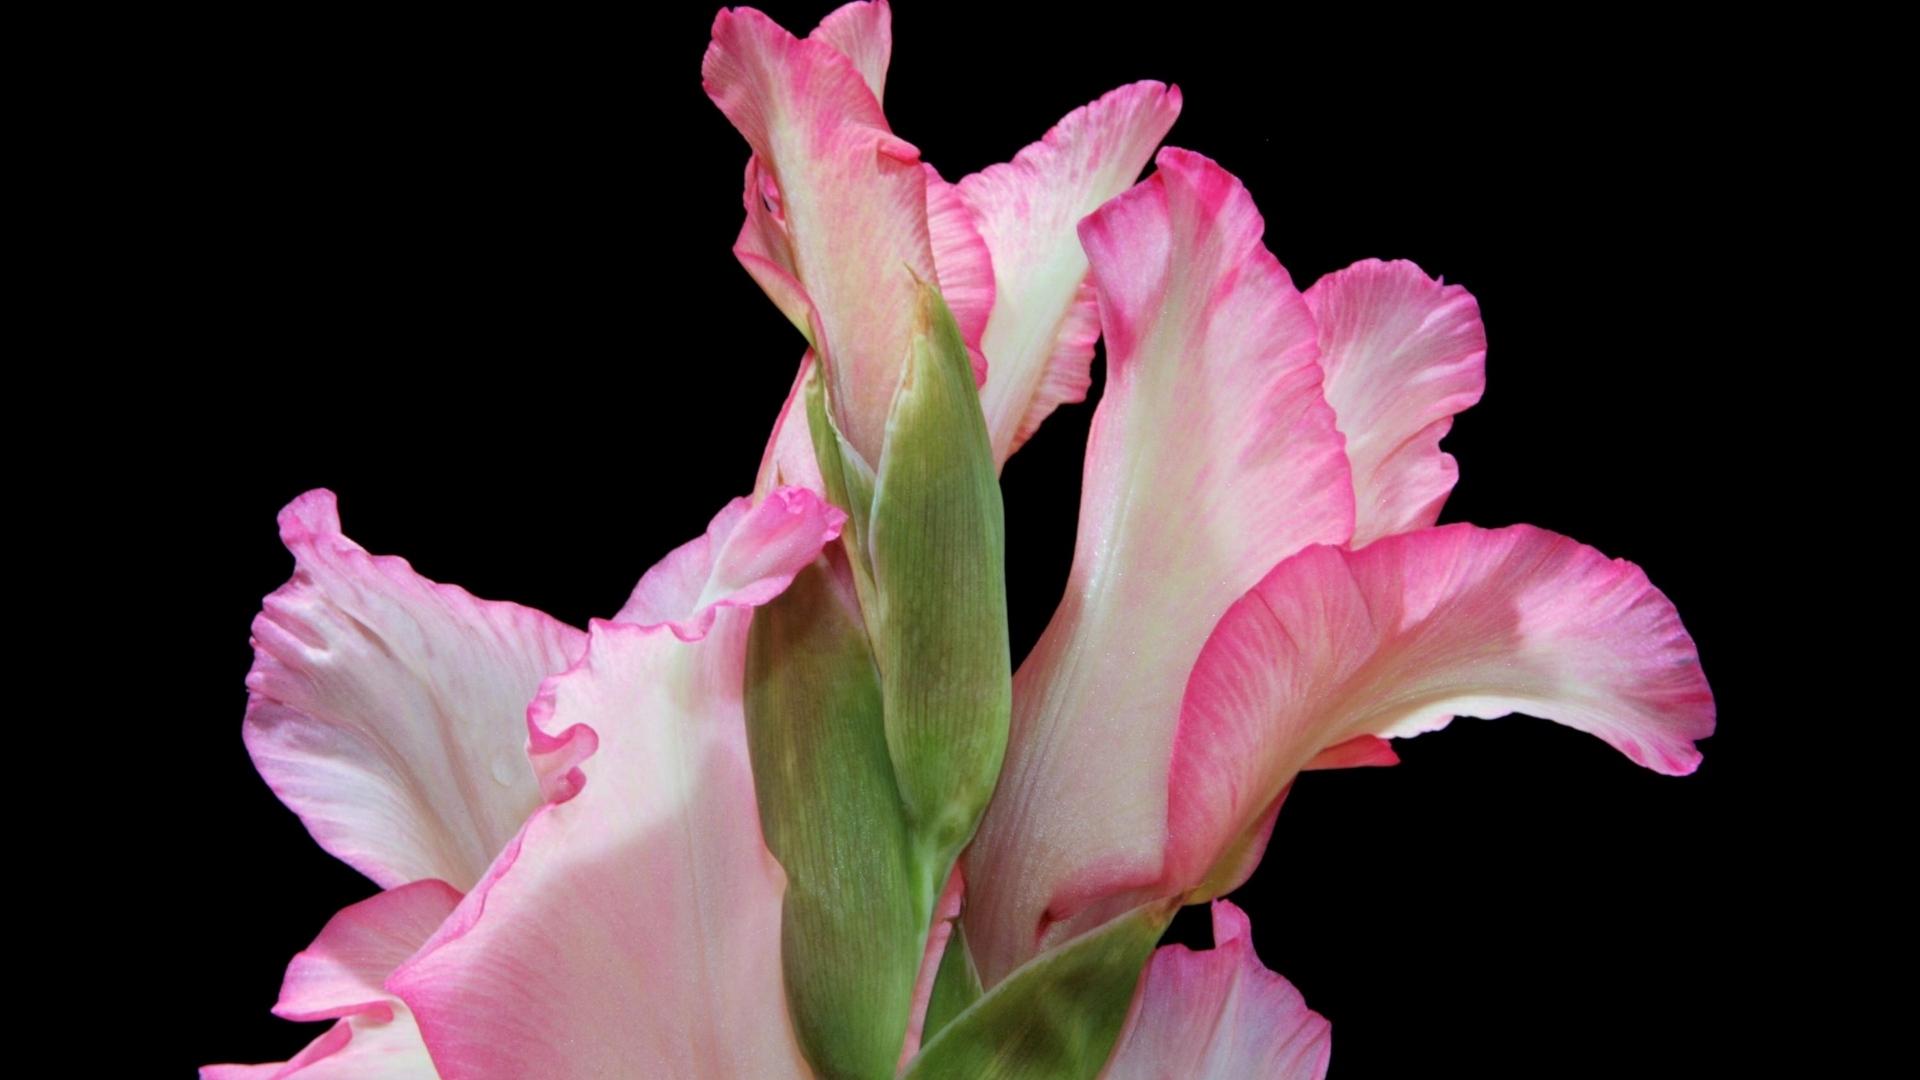 Download wallpaper 1920x1080 gladiolus, flower, close up, black